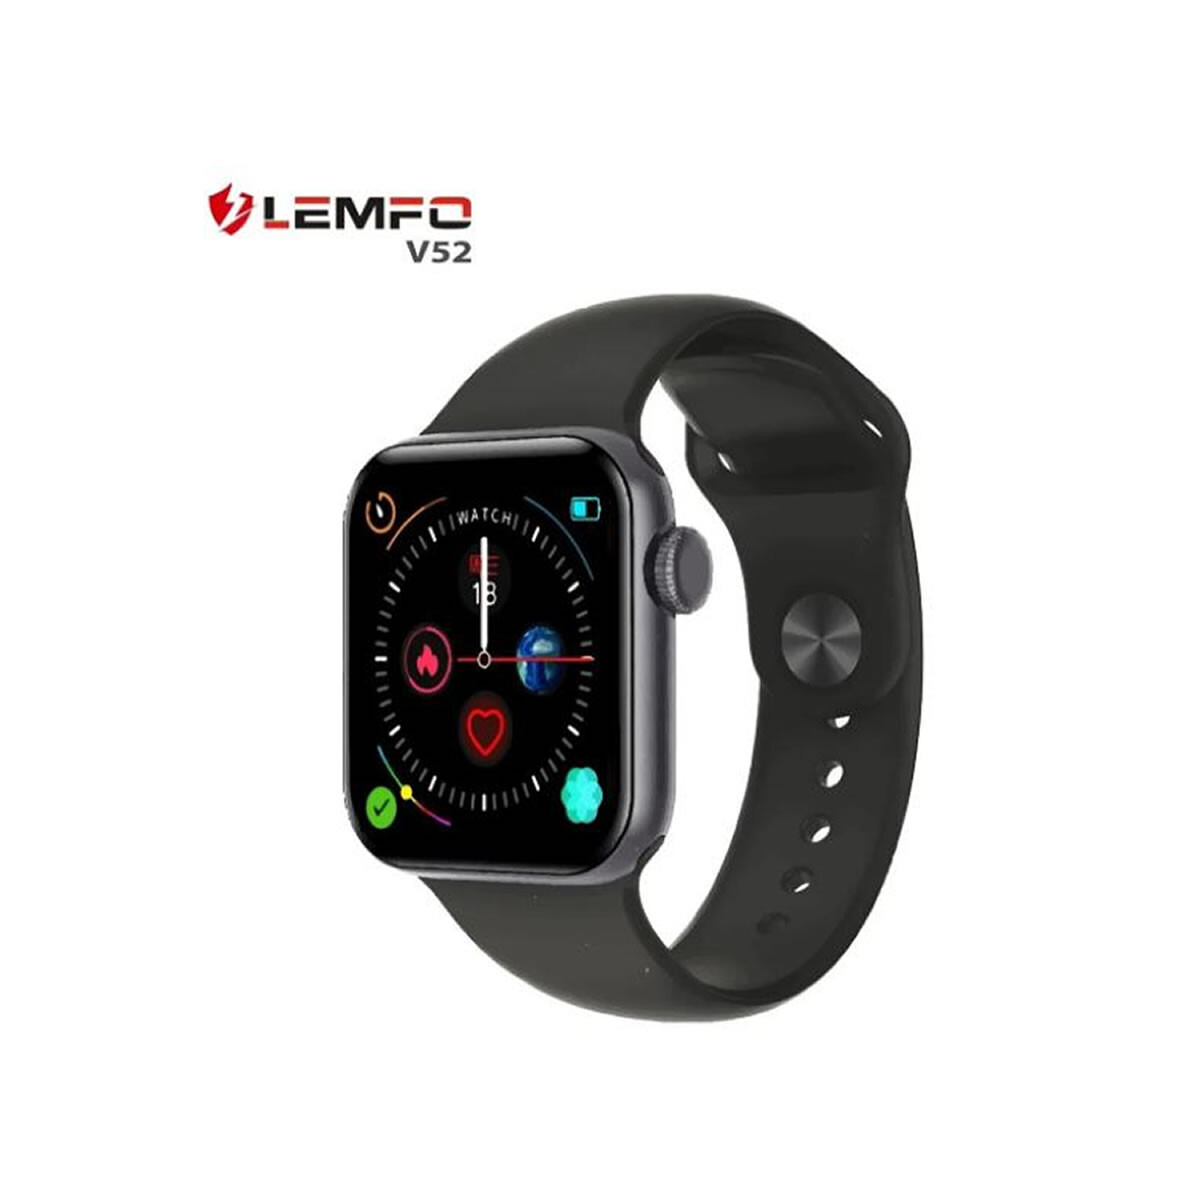 Smartwatch Lemfo V52 